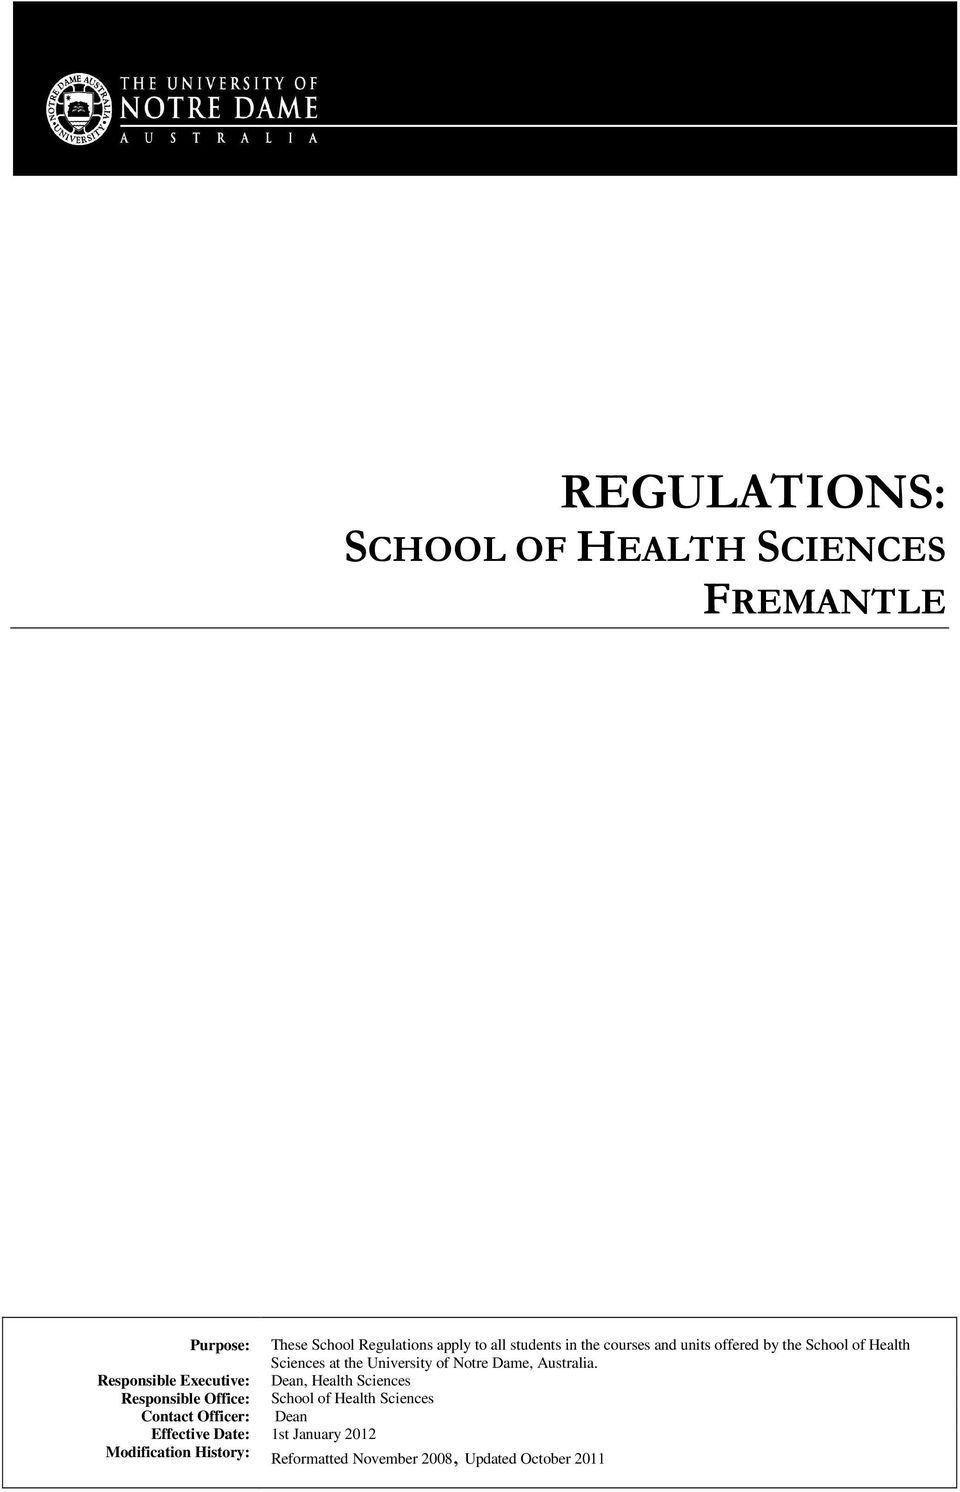 Responsible Executive: Dean, Health Sciences Responsible Office: School of Health Sciences Contact Officer: